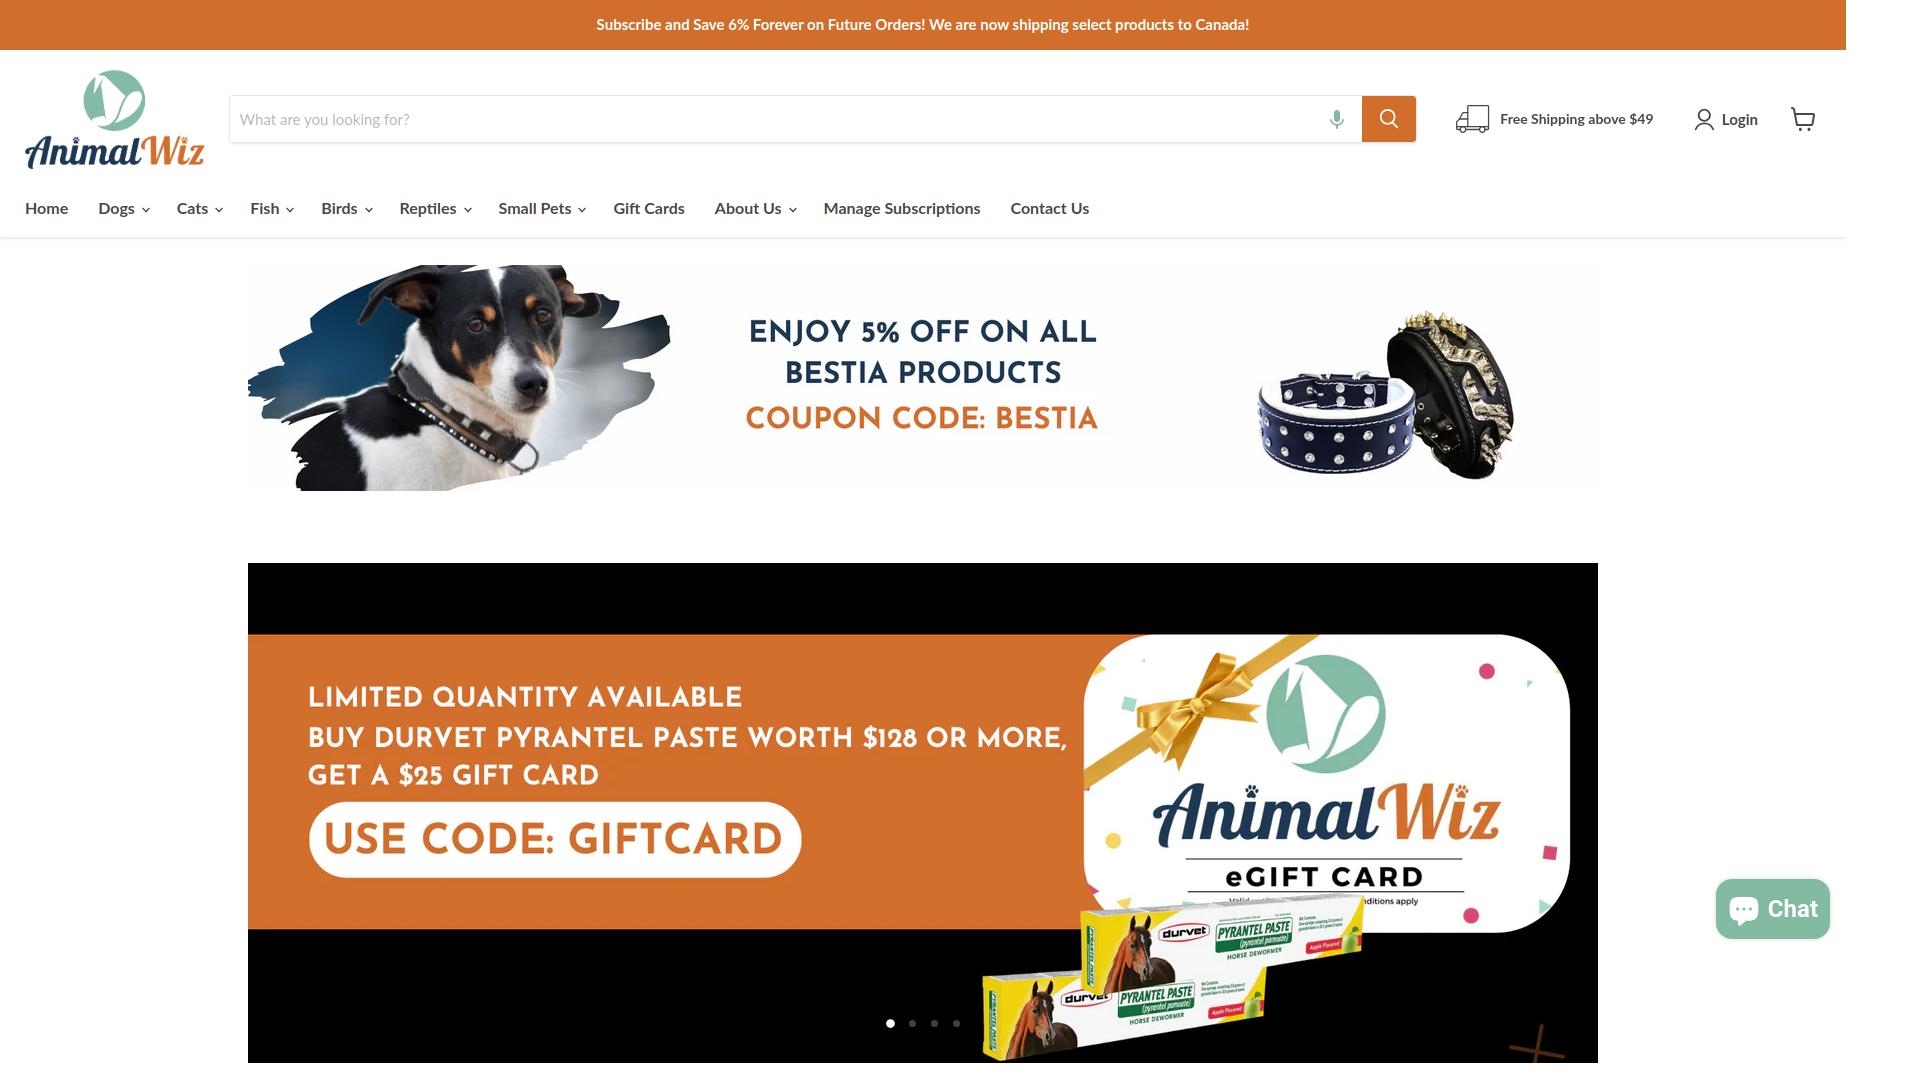 GIMBORN Kwik Stop Styptic Powder Dog Cat & Bird Nail Care - 3 Sizes  Available Kwik Stop Powder - 6 oz